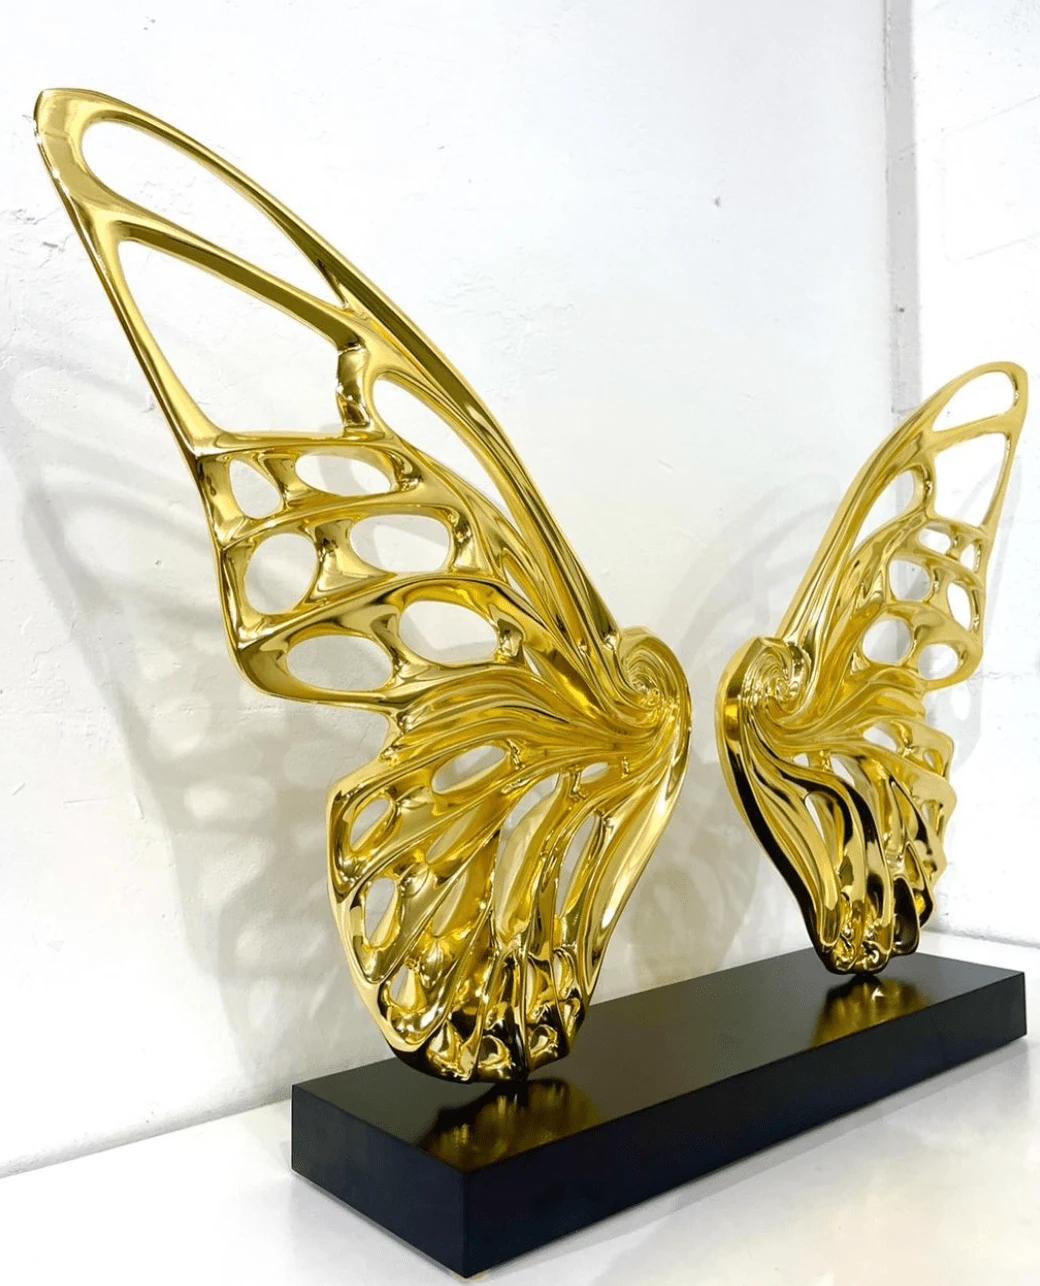 Dream Machine, Gold Chrome - Sculpture by Rubem Robierb